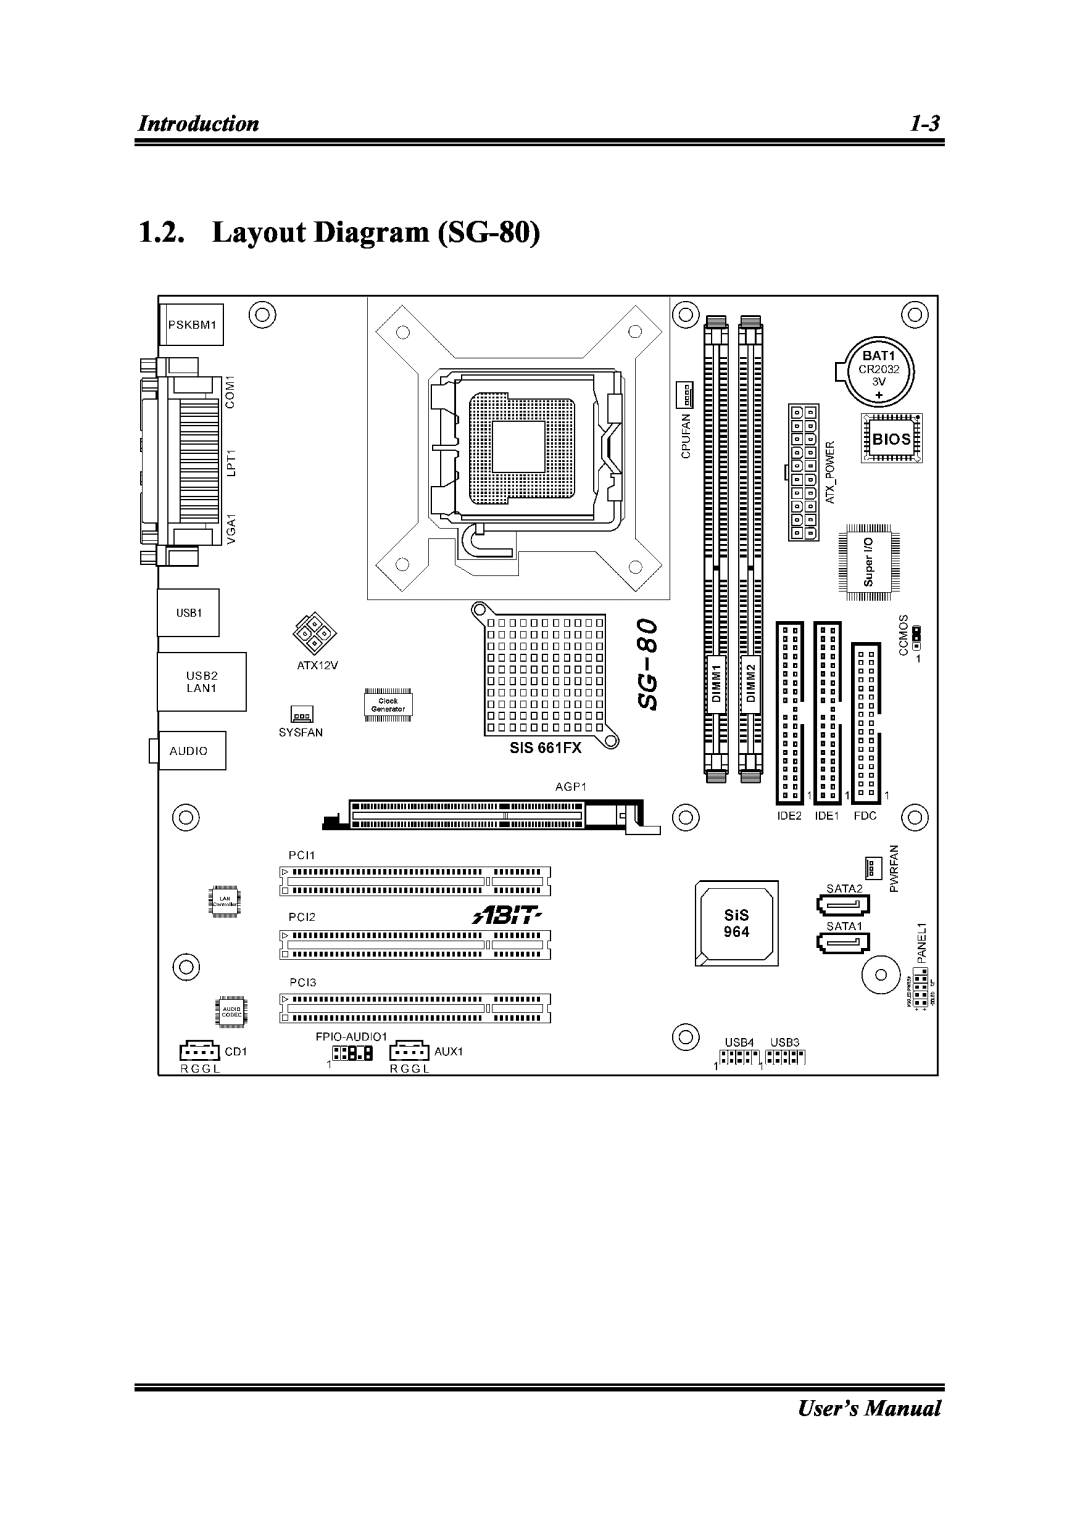 Intel SG-81 user manual Layout Diagram SG-80, Introduction, User’s Manual 